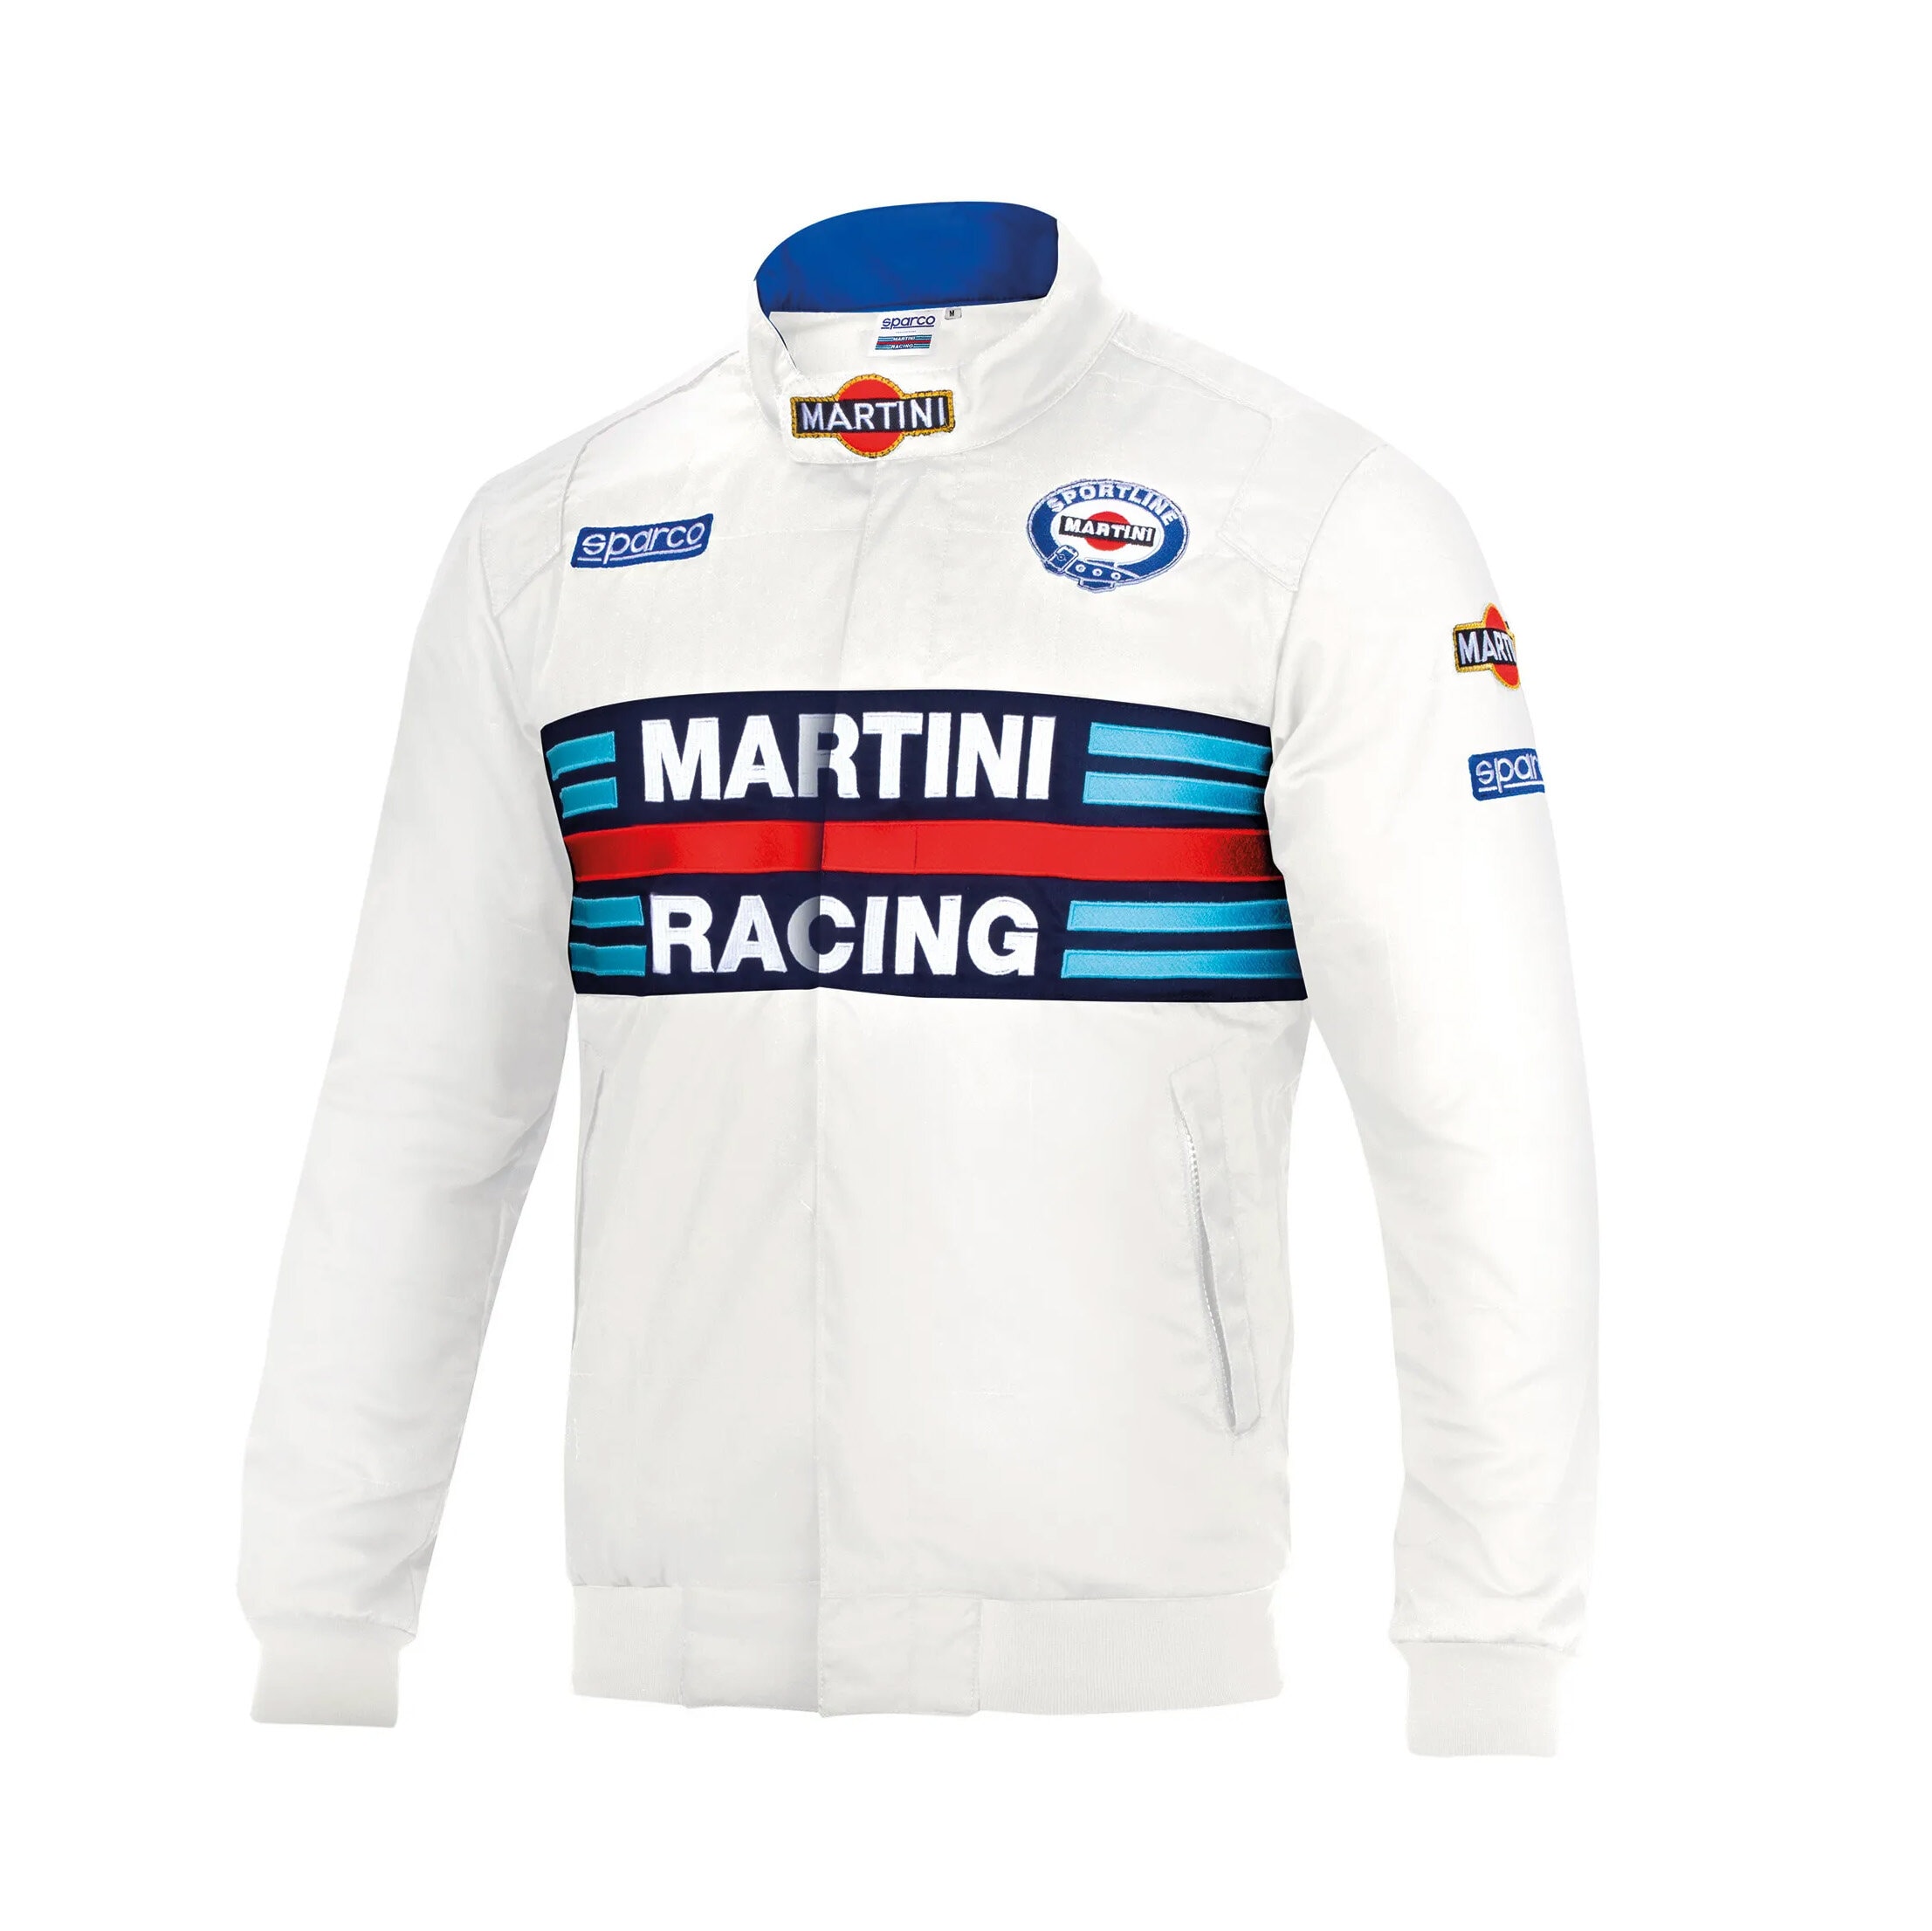 Jakke Martini Racing Bomber Hvid